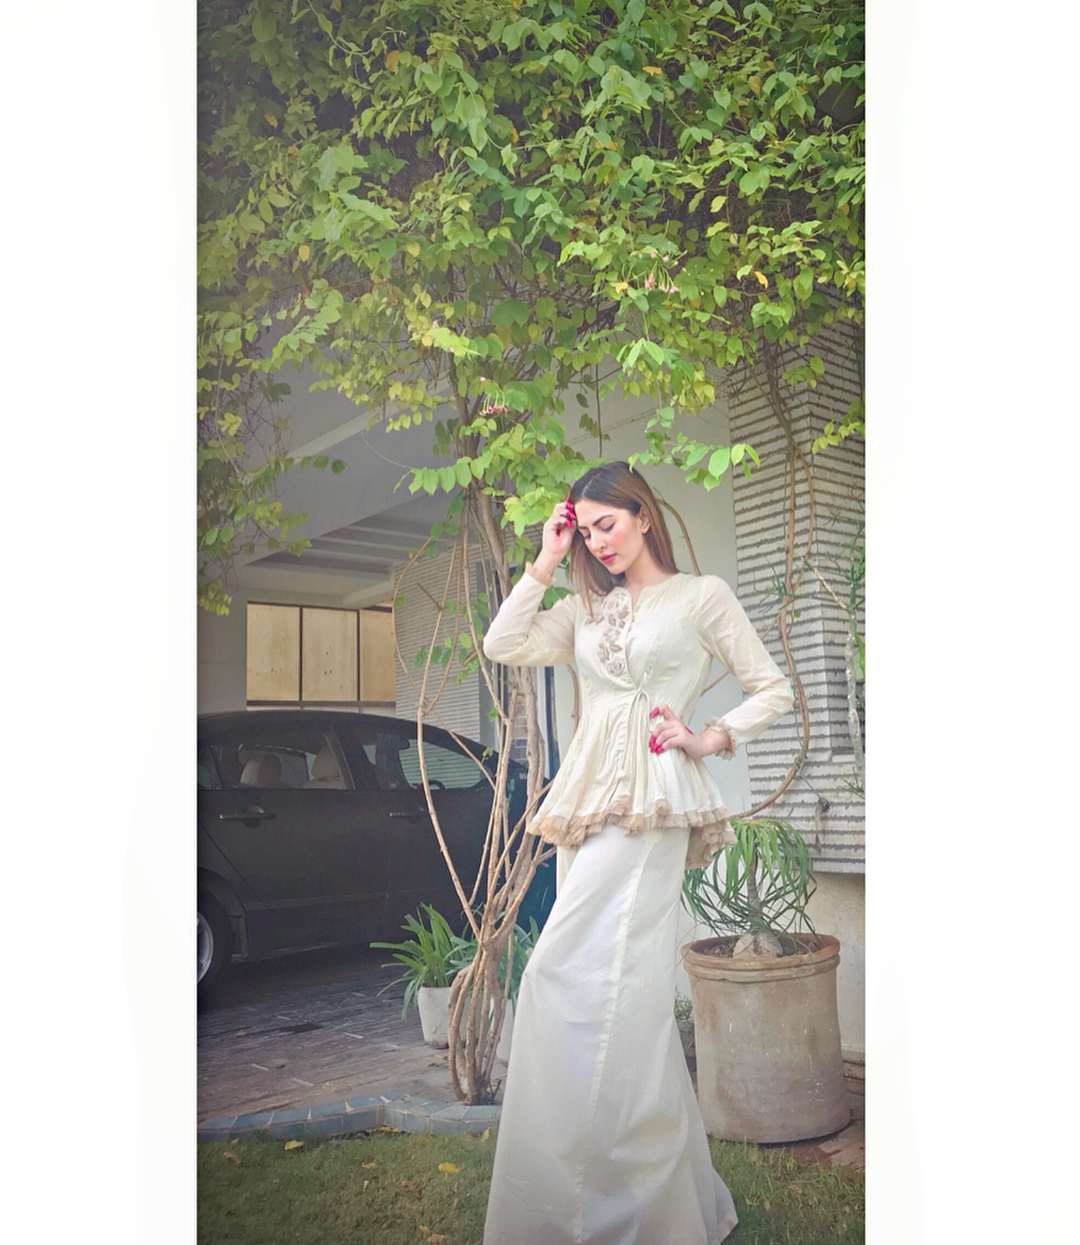 Hamza Ali Abbasi Wife Naimal Khawar - 30 Beautiful Pictures